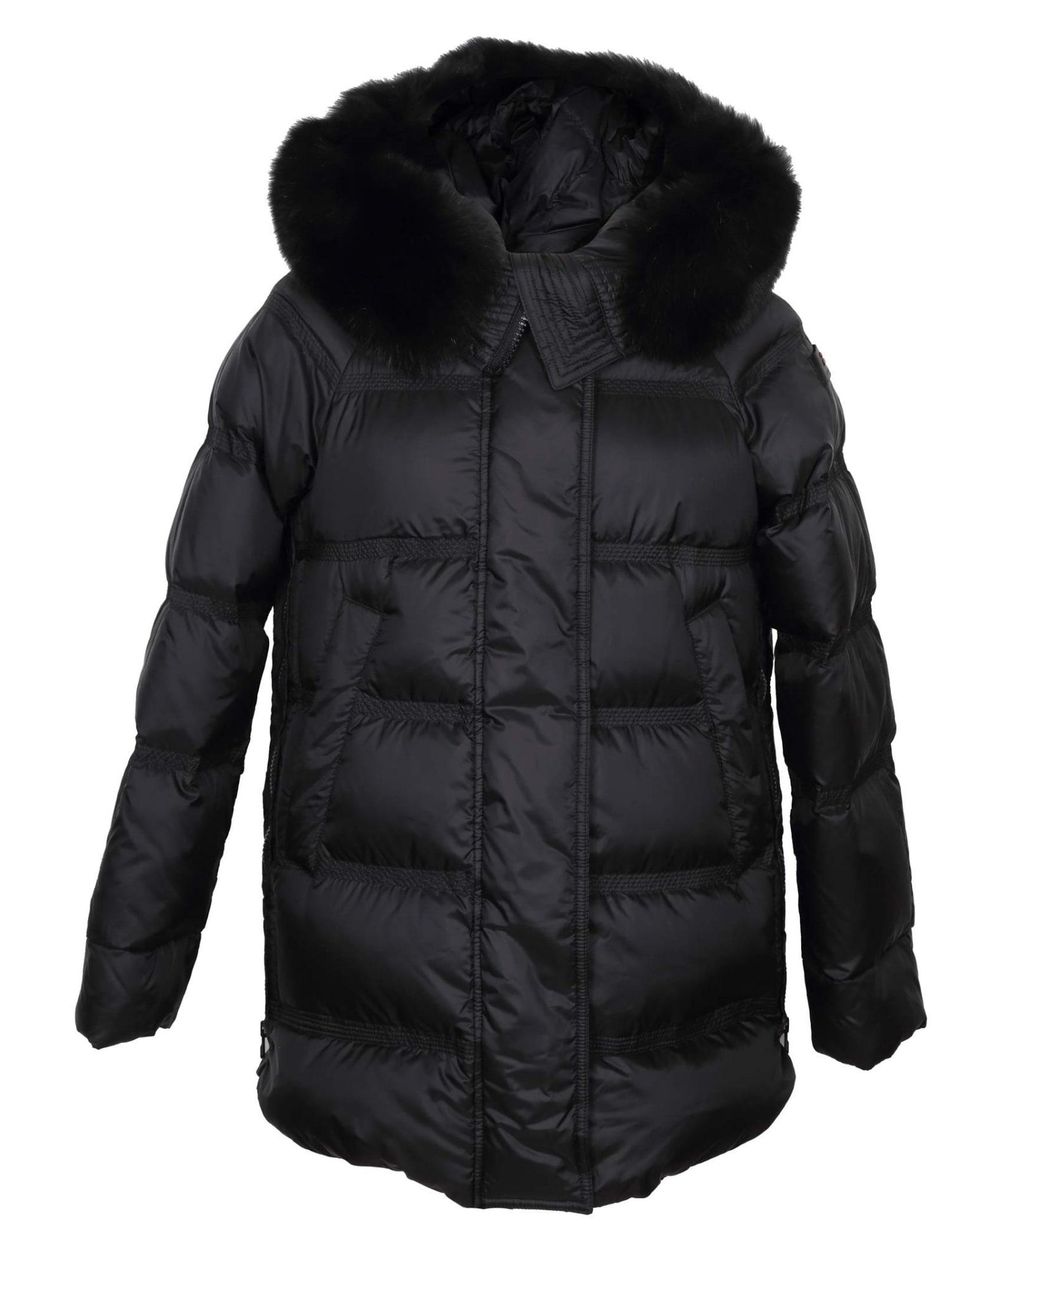 Peuterey Takan Down Jacket Mq 02 Fur Black Color | Lyst